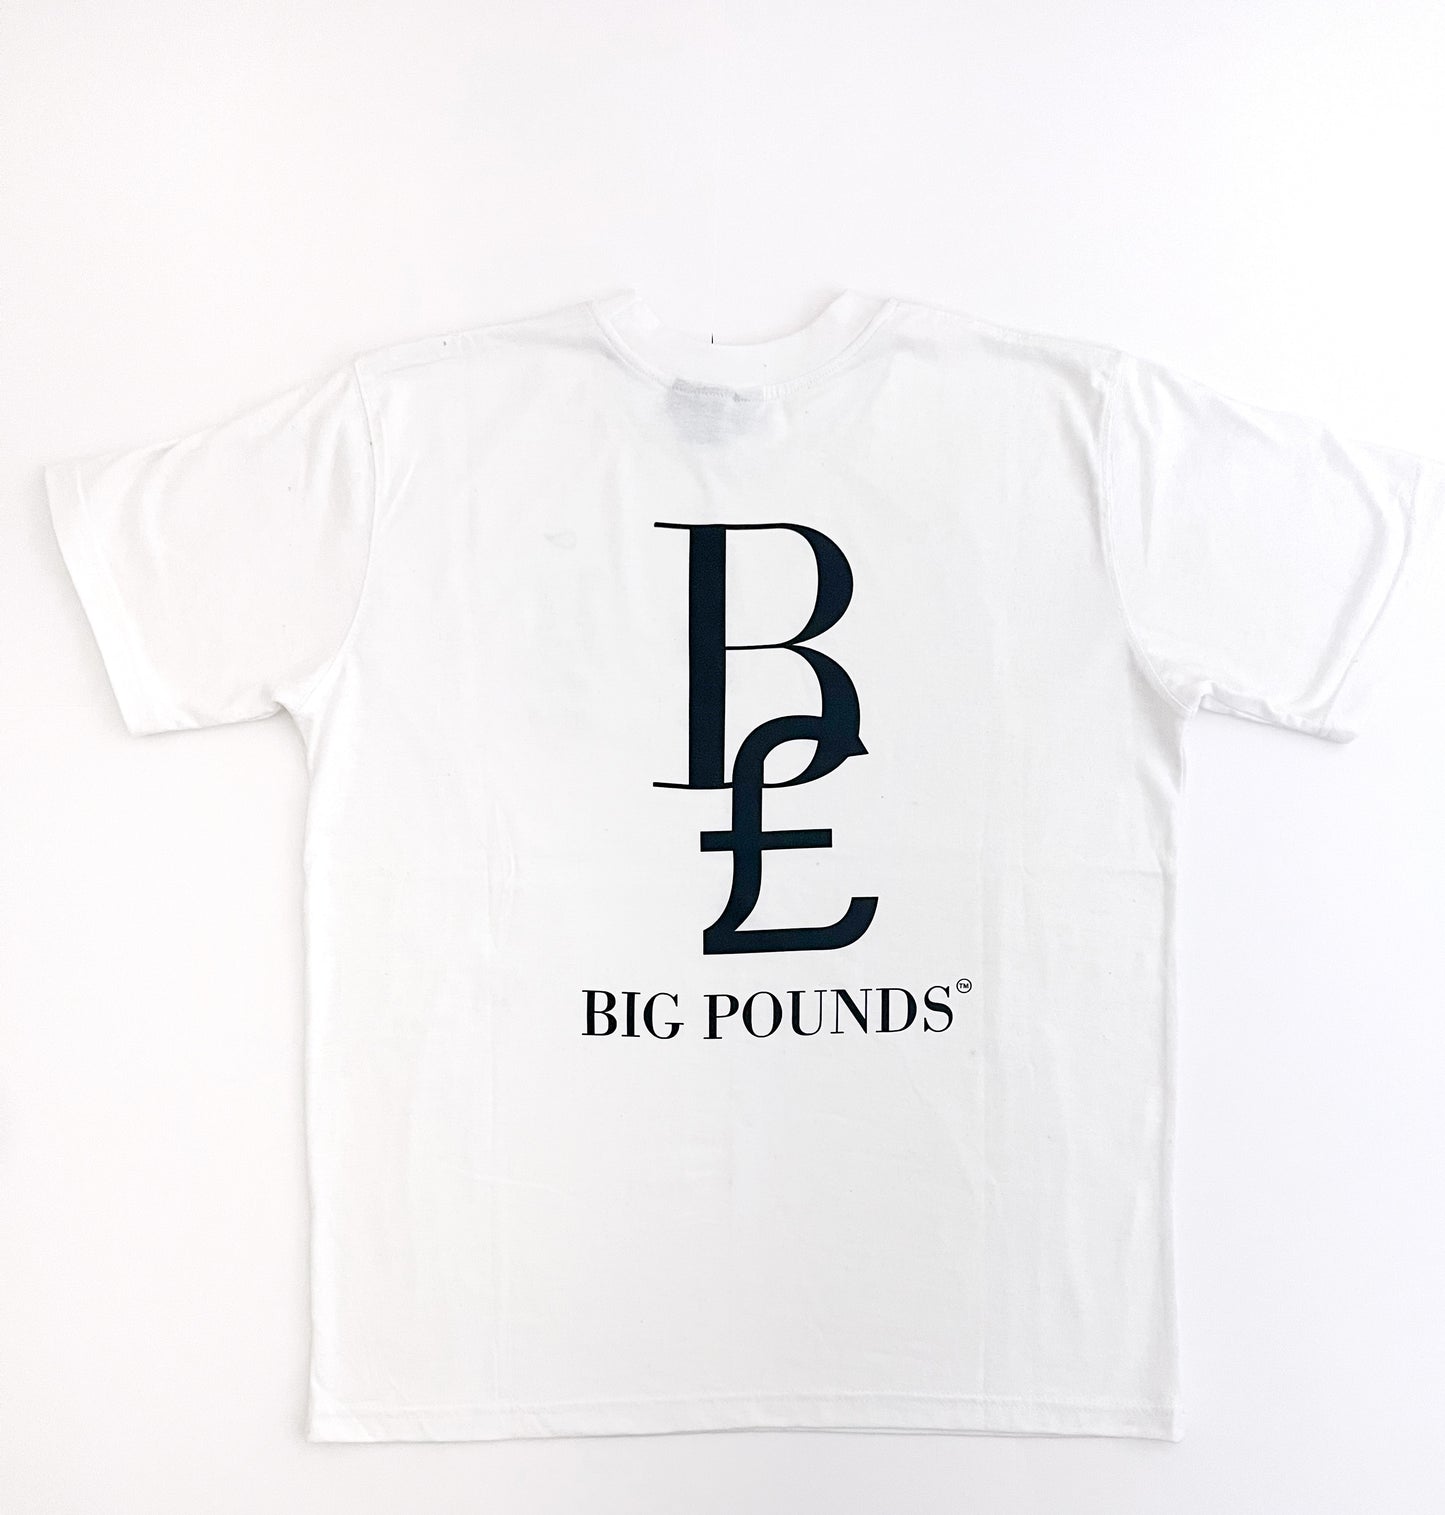 Big Pounds B£ Original T-shirt